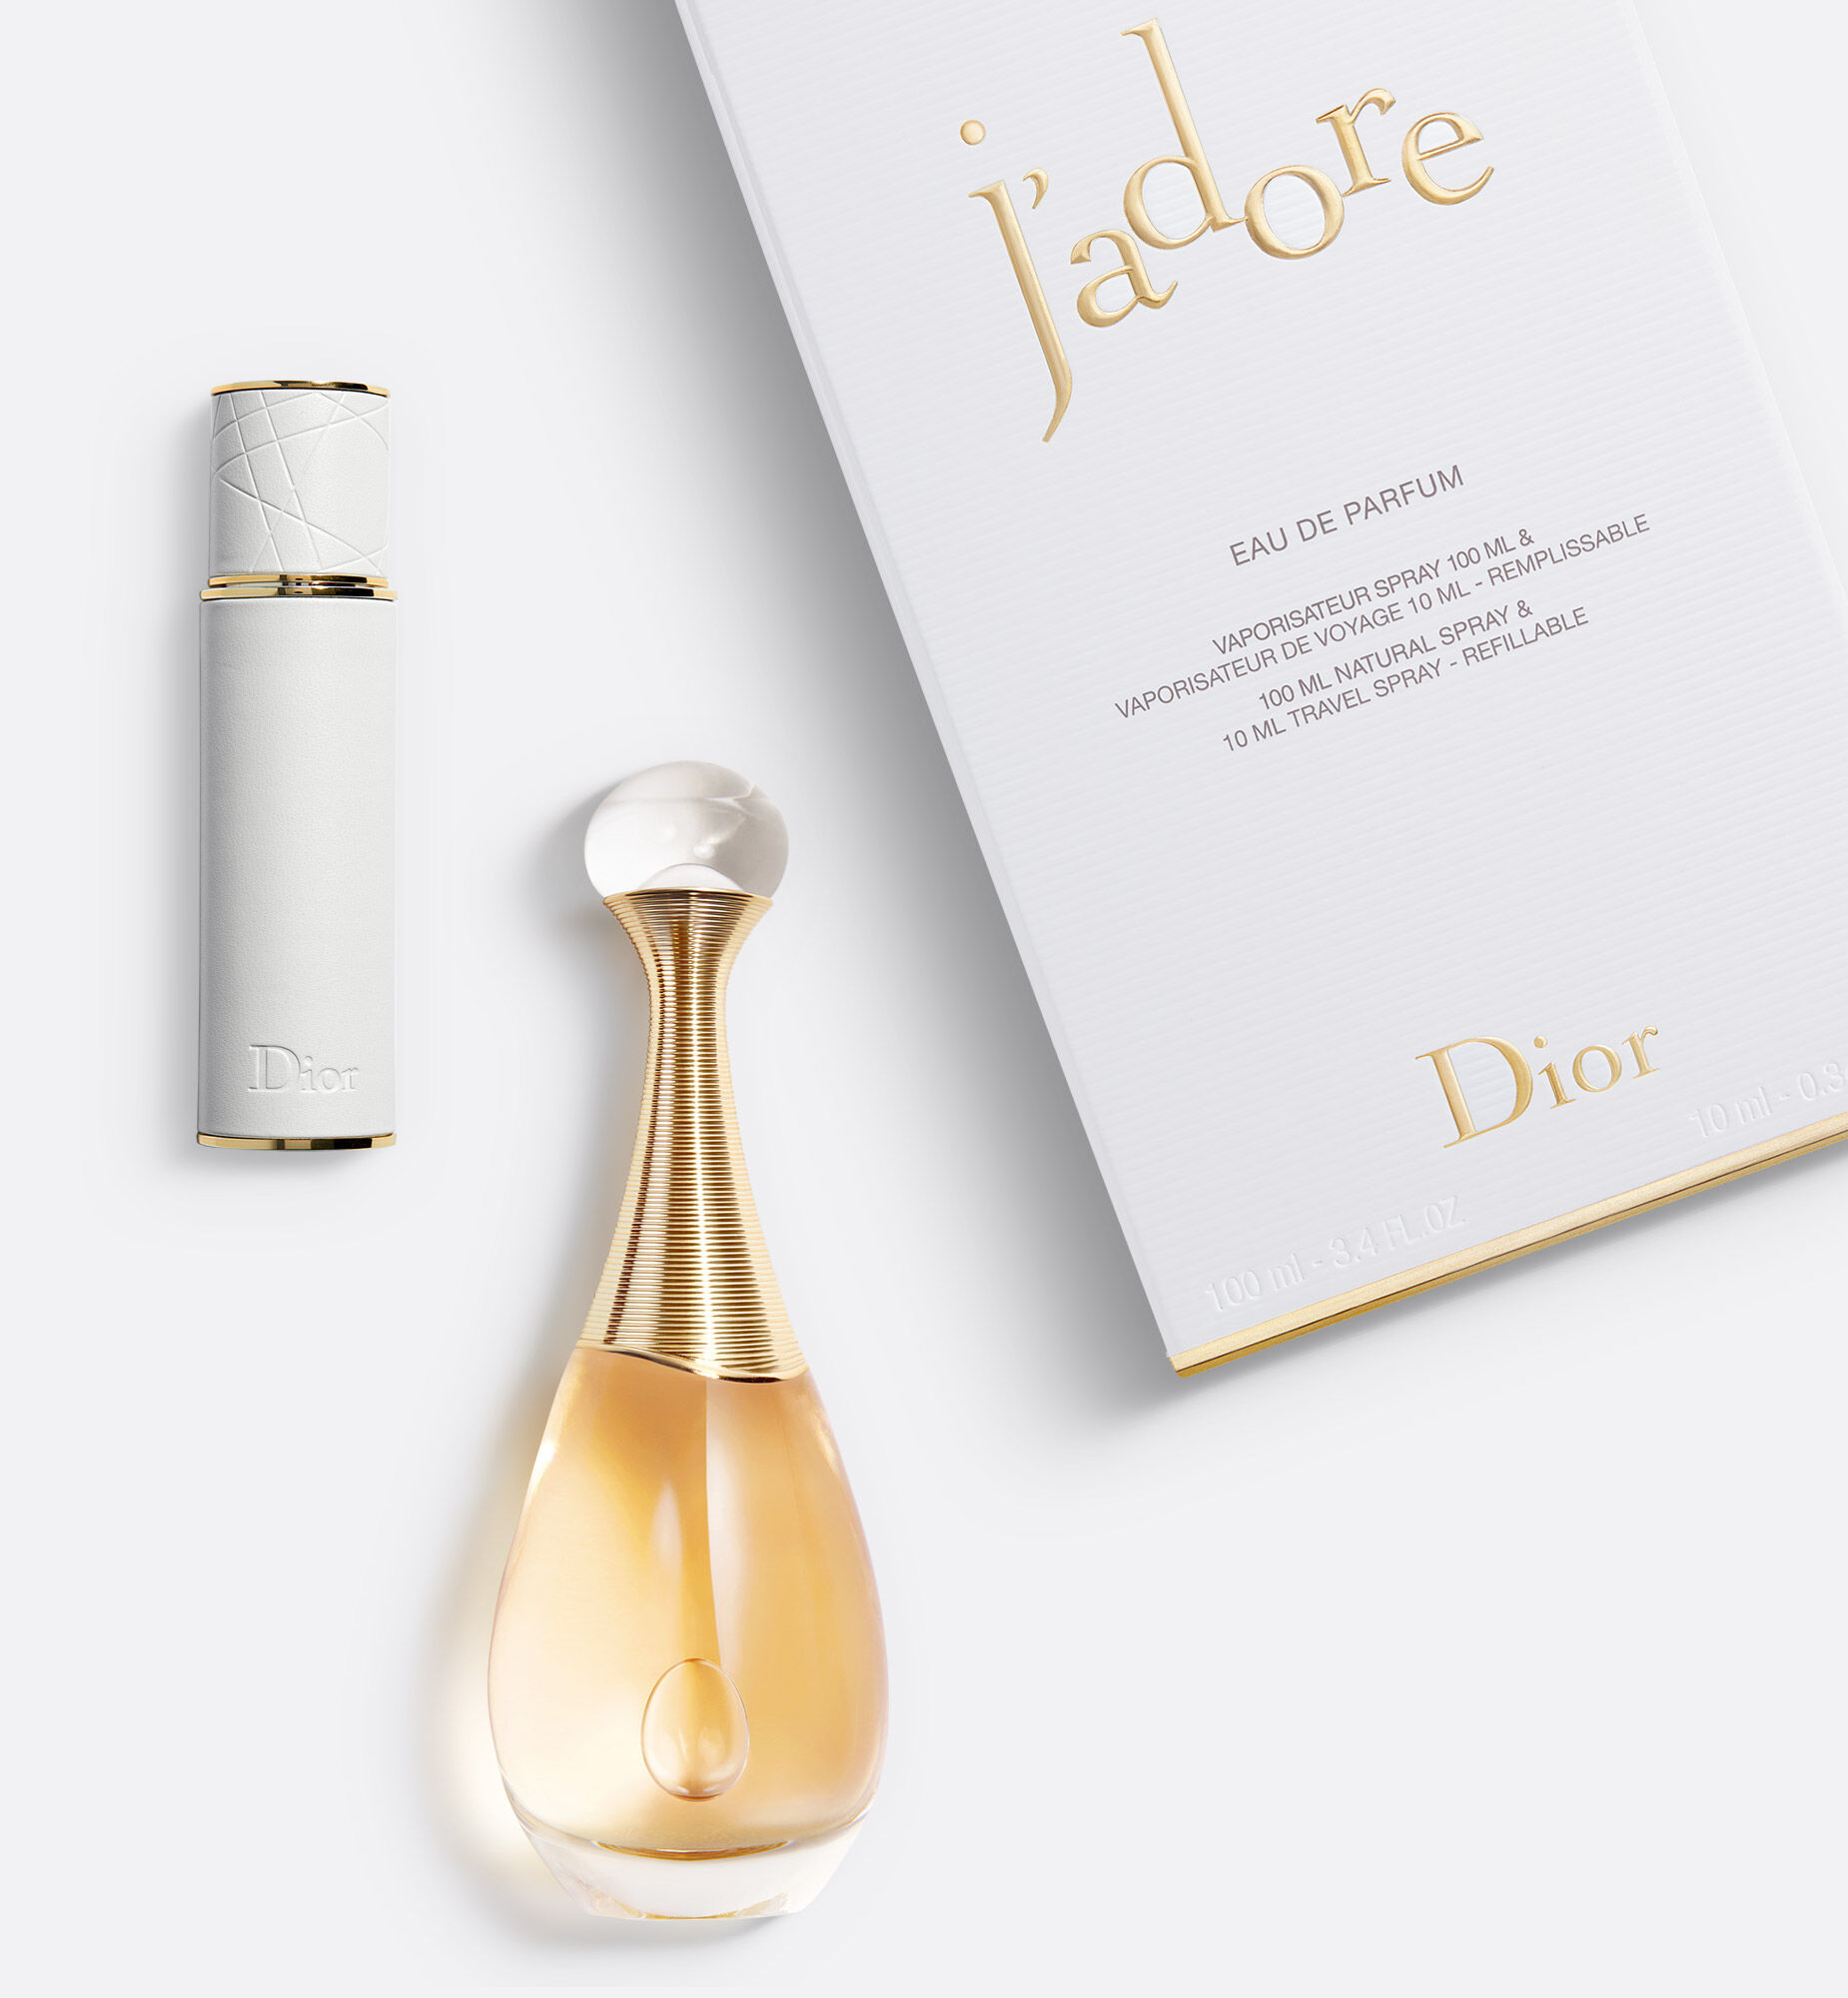 J039adore Voile de Parfum by Chirstian Dior 34 oz spy Edp Perfume women  femme  eBay